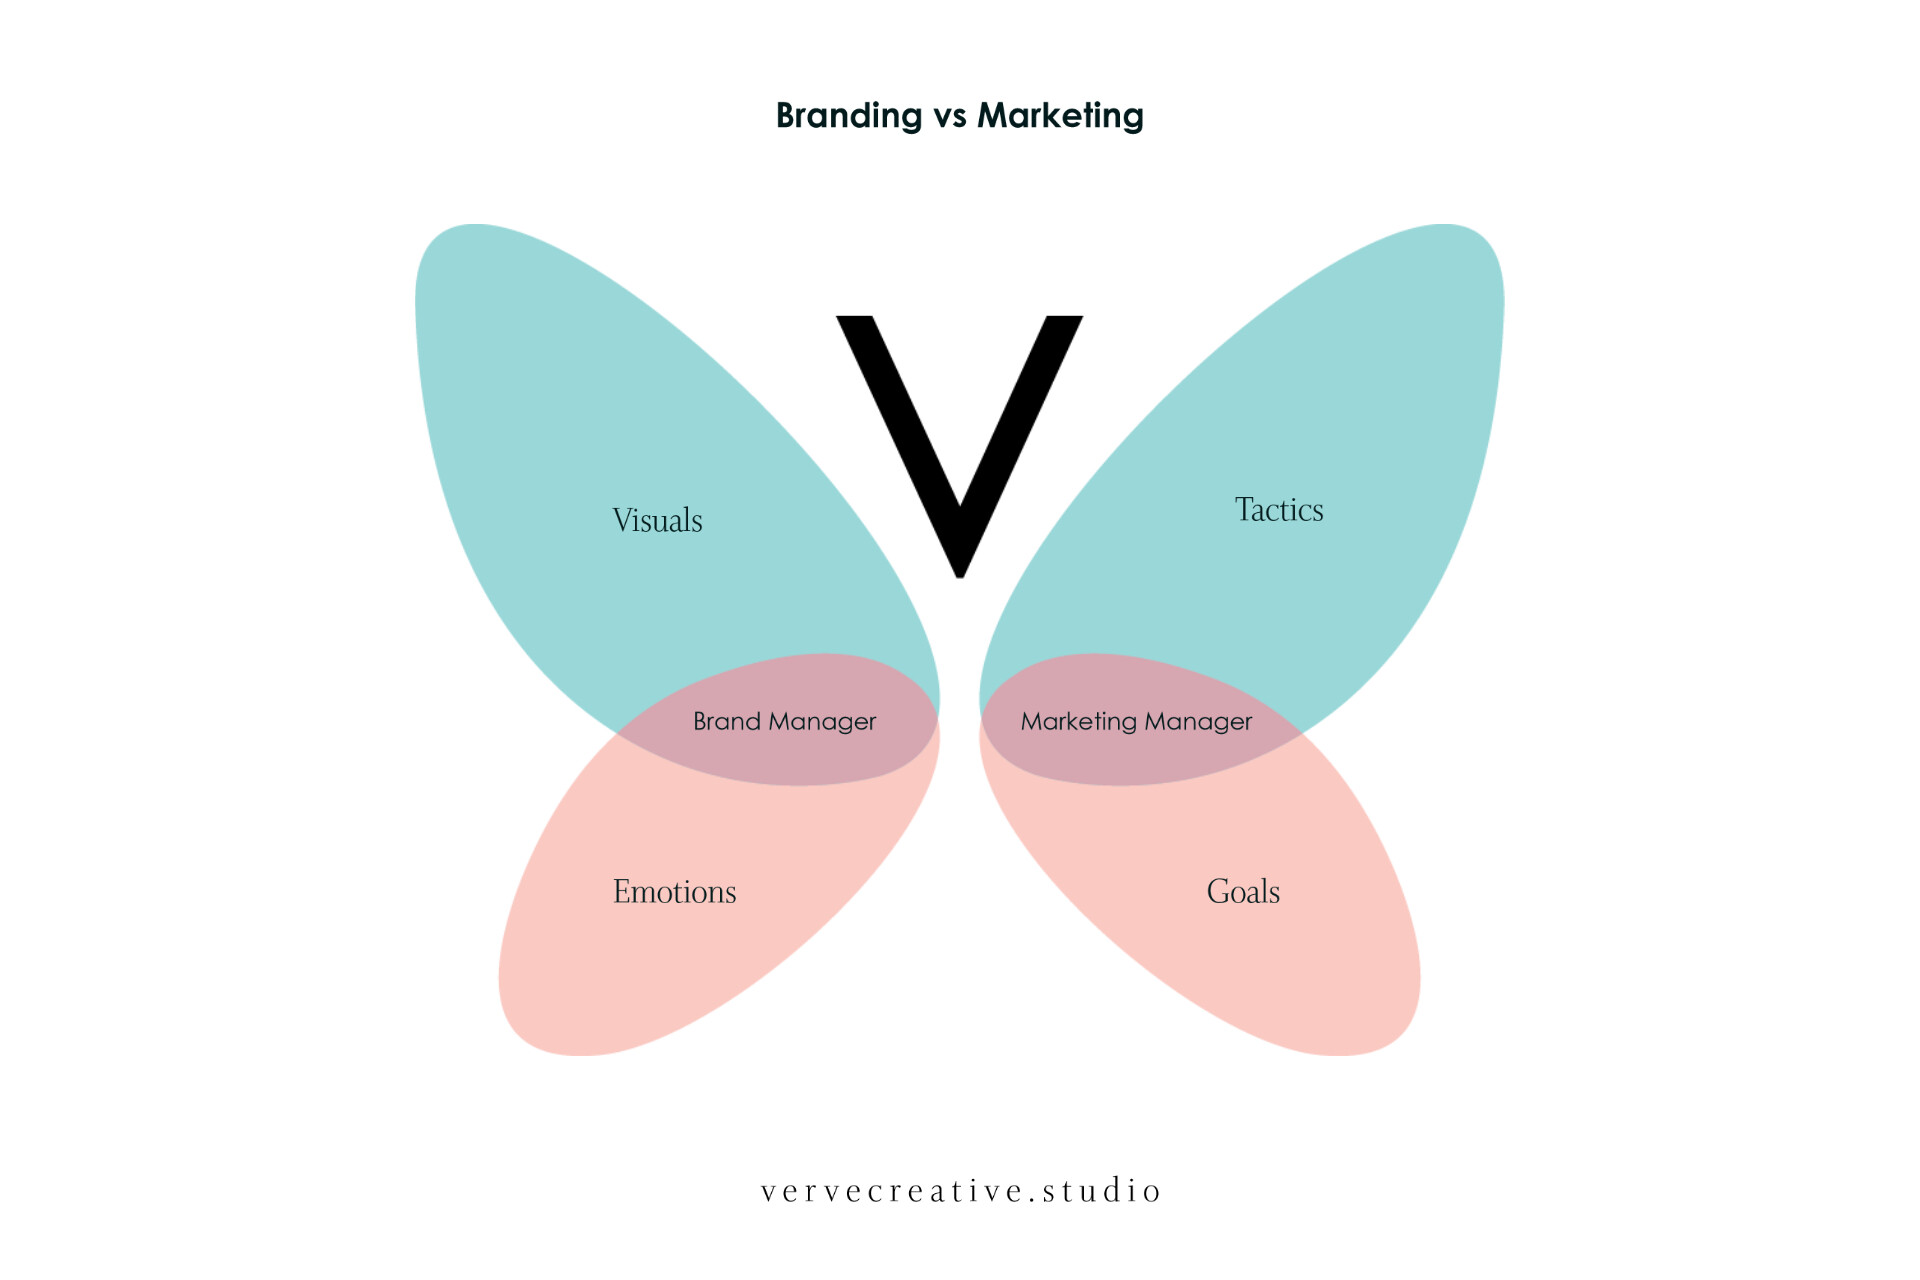 Brand Manager vs Marketing Manager